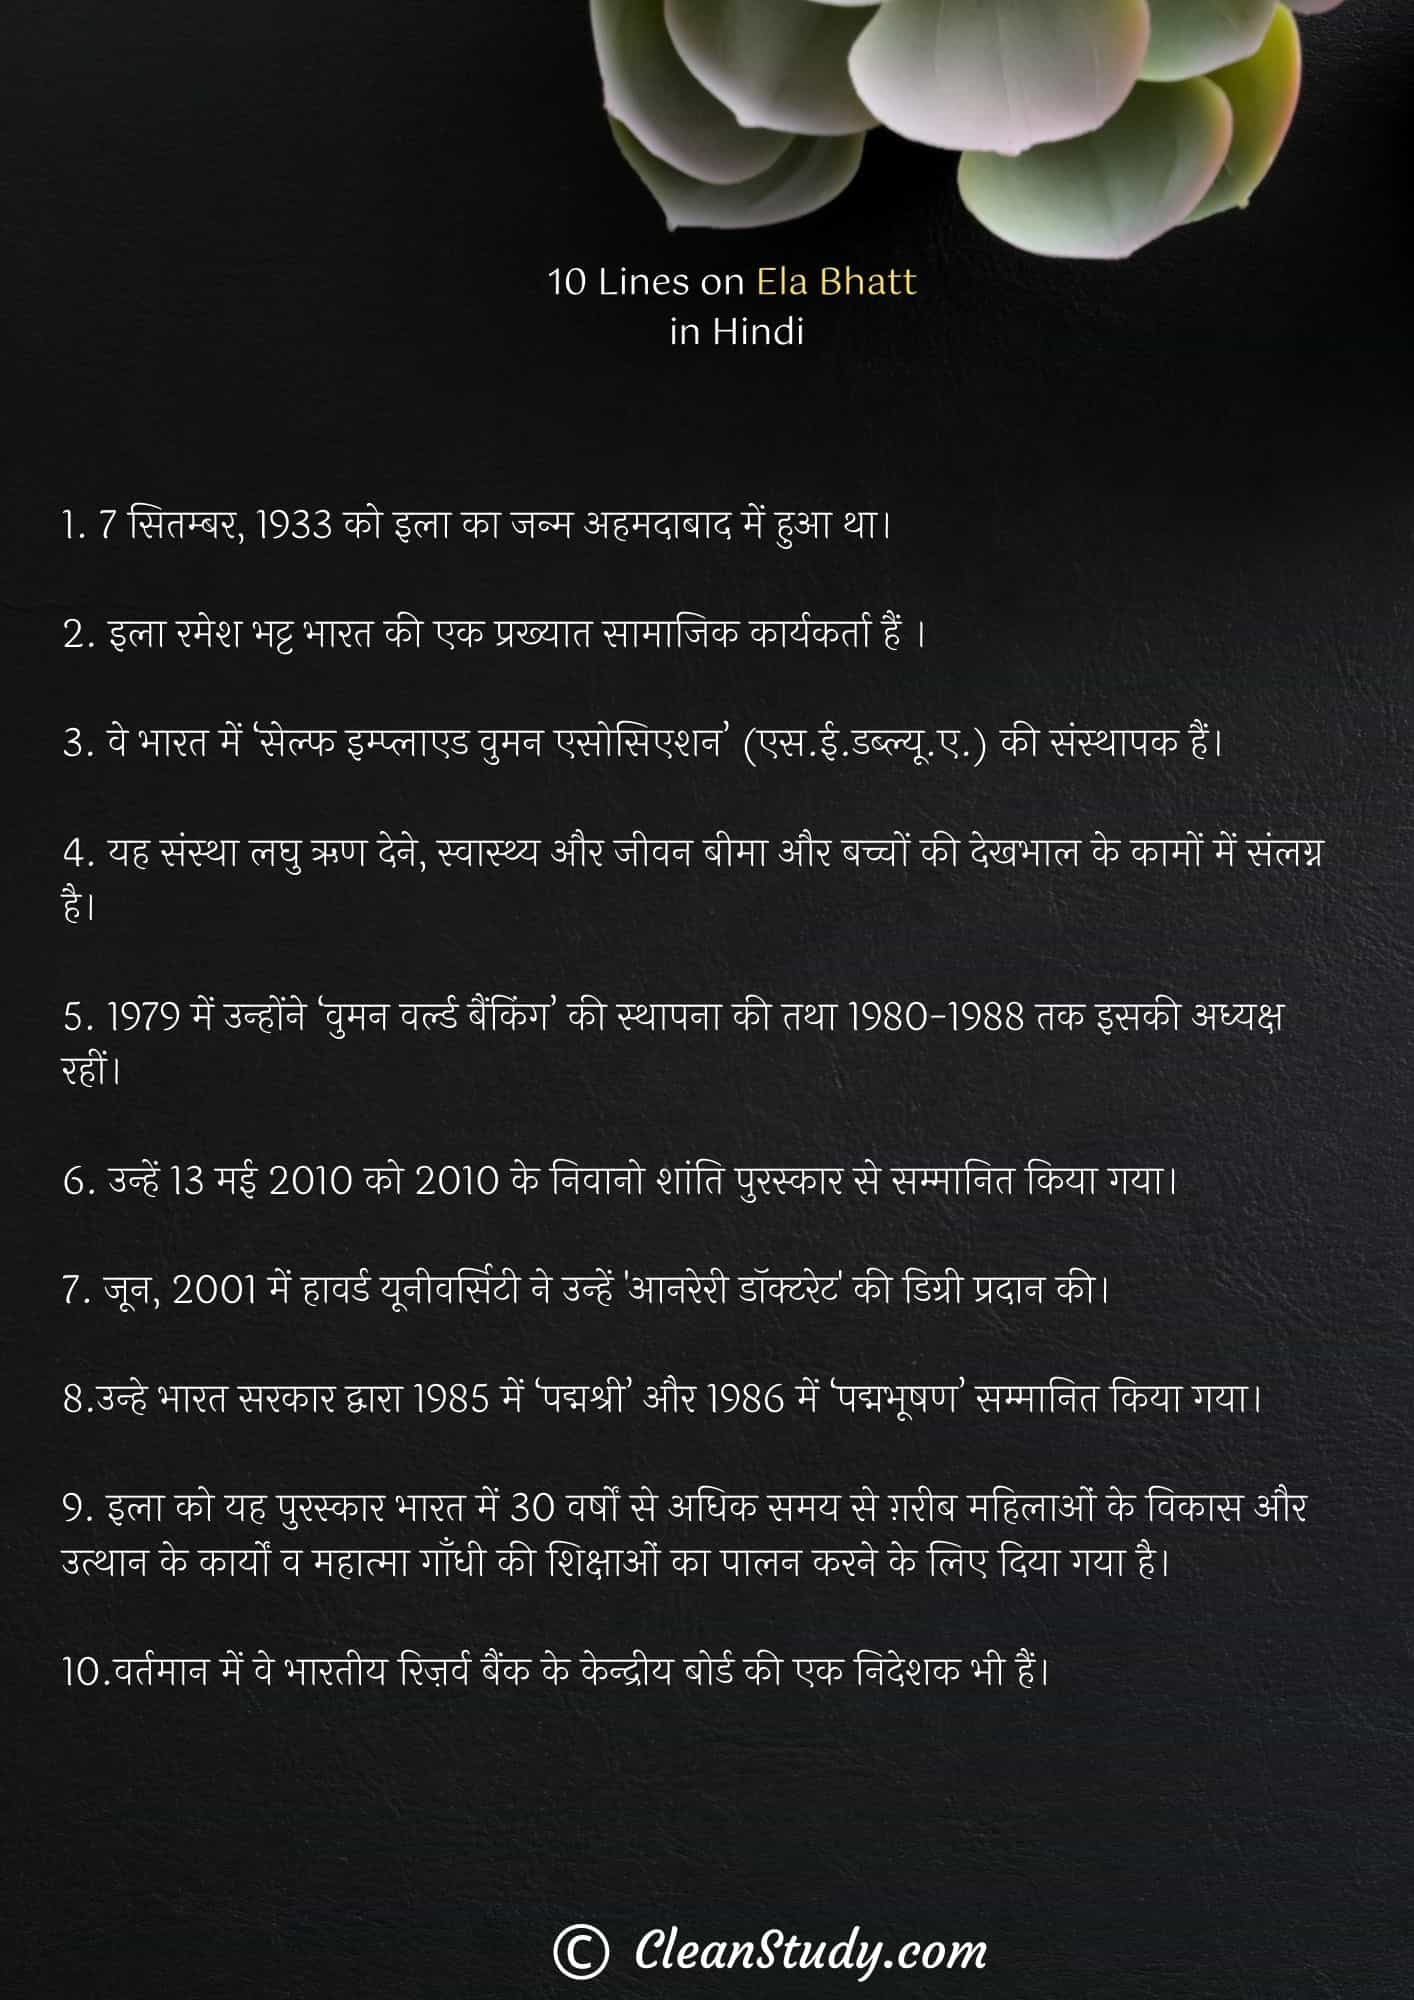 10 Lines on Ela Bhatt in Hindi